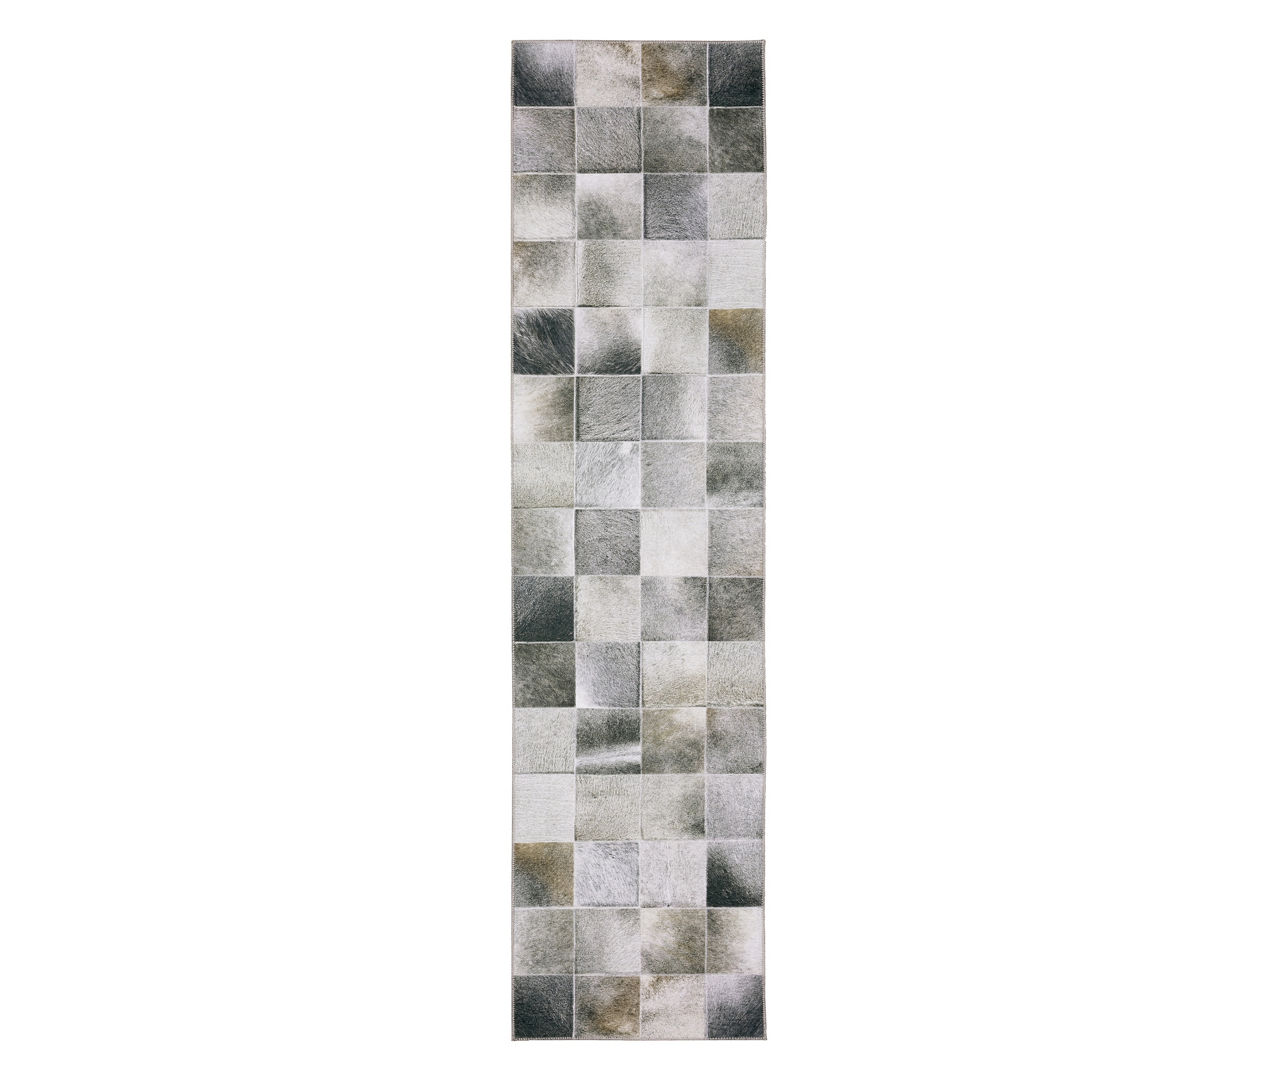 Mylen Gray & Charcoal Faux Hide Tile Pattern Area Rug, (8.9' x 12')